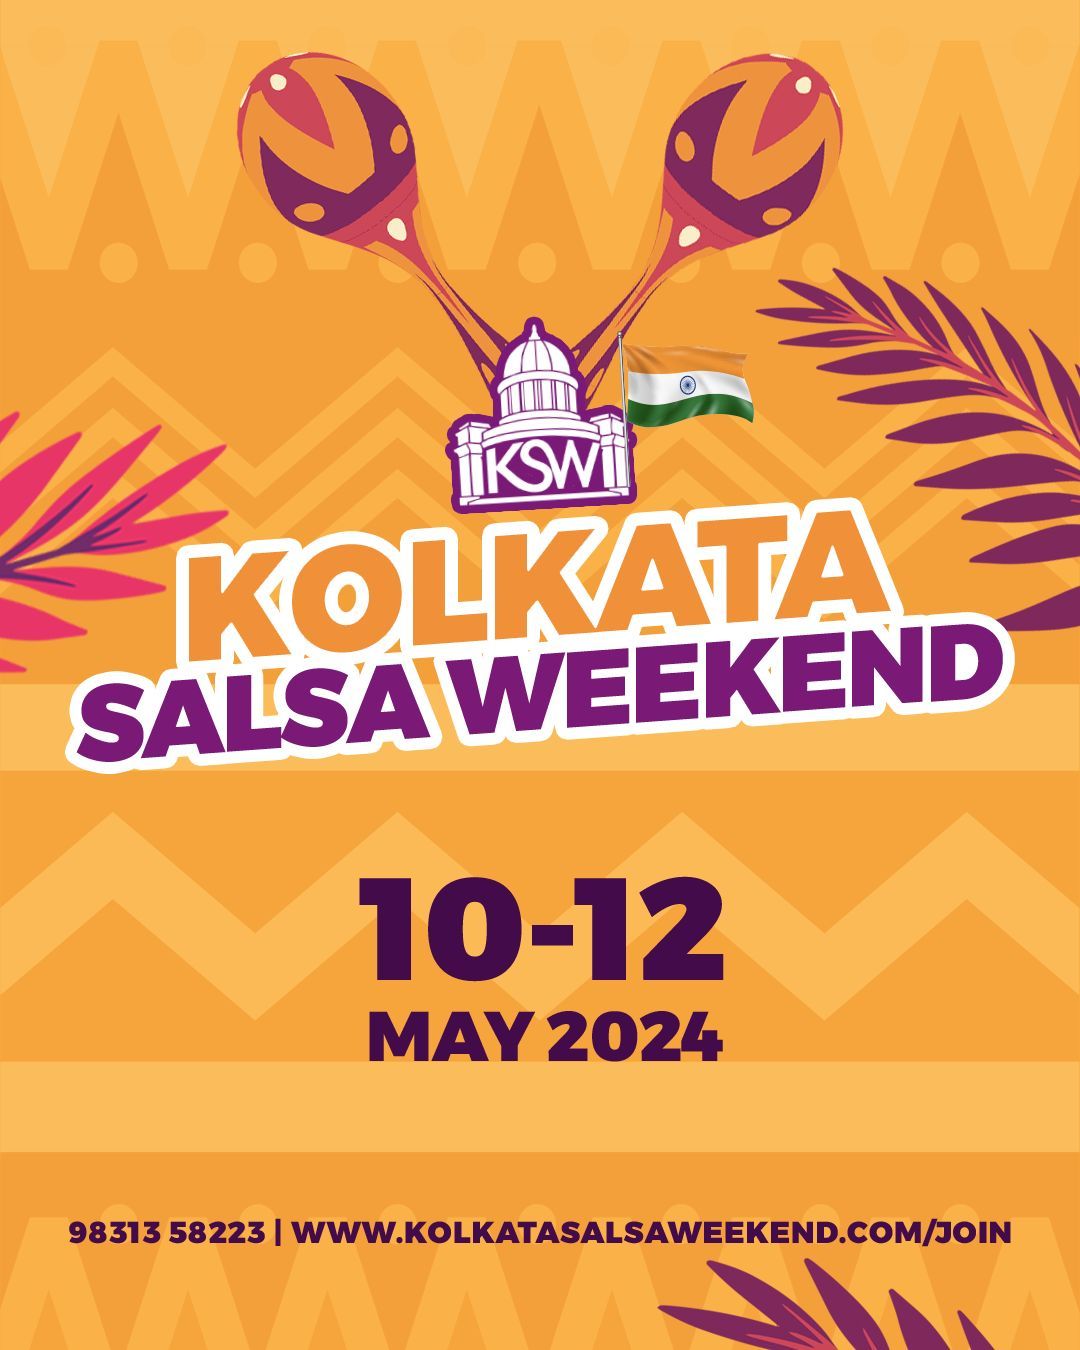 KSW: Kolkata Salsa Weekend 2024